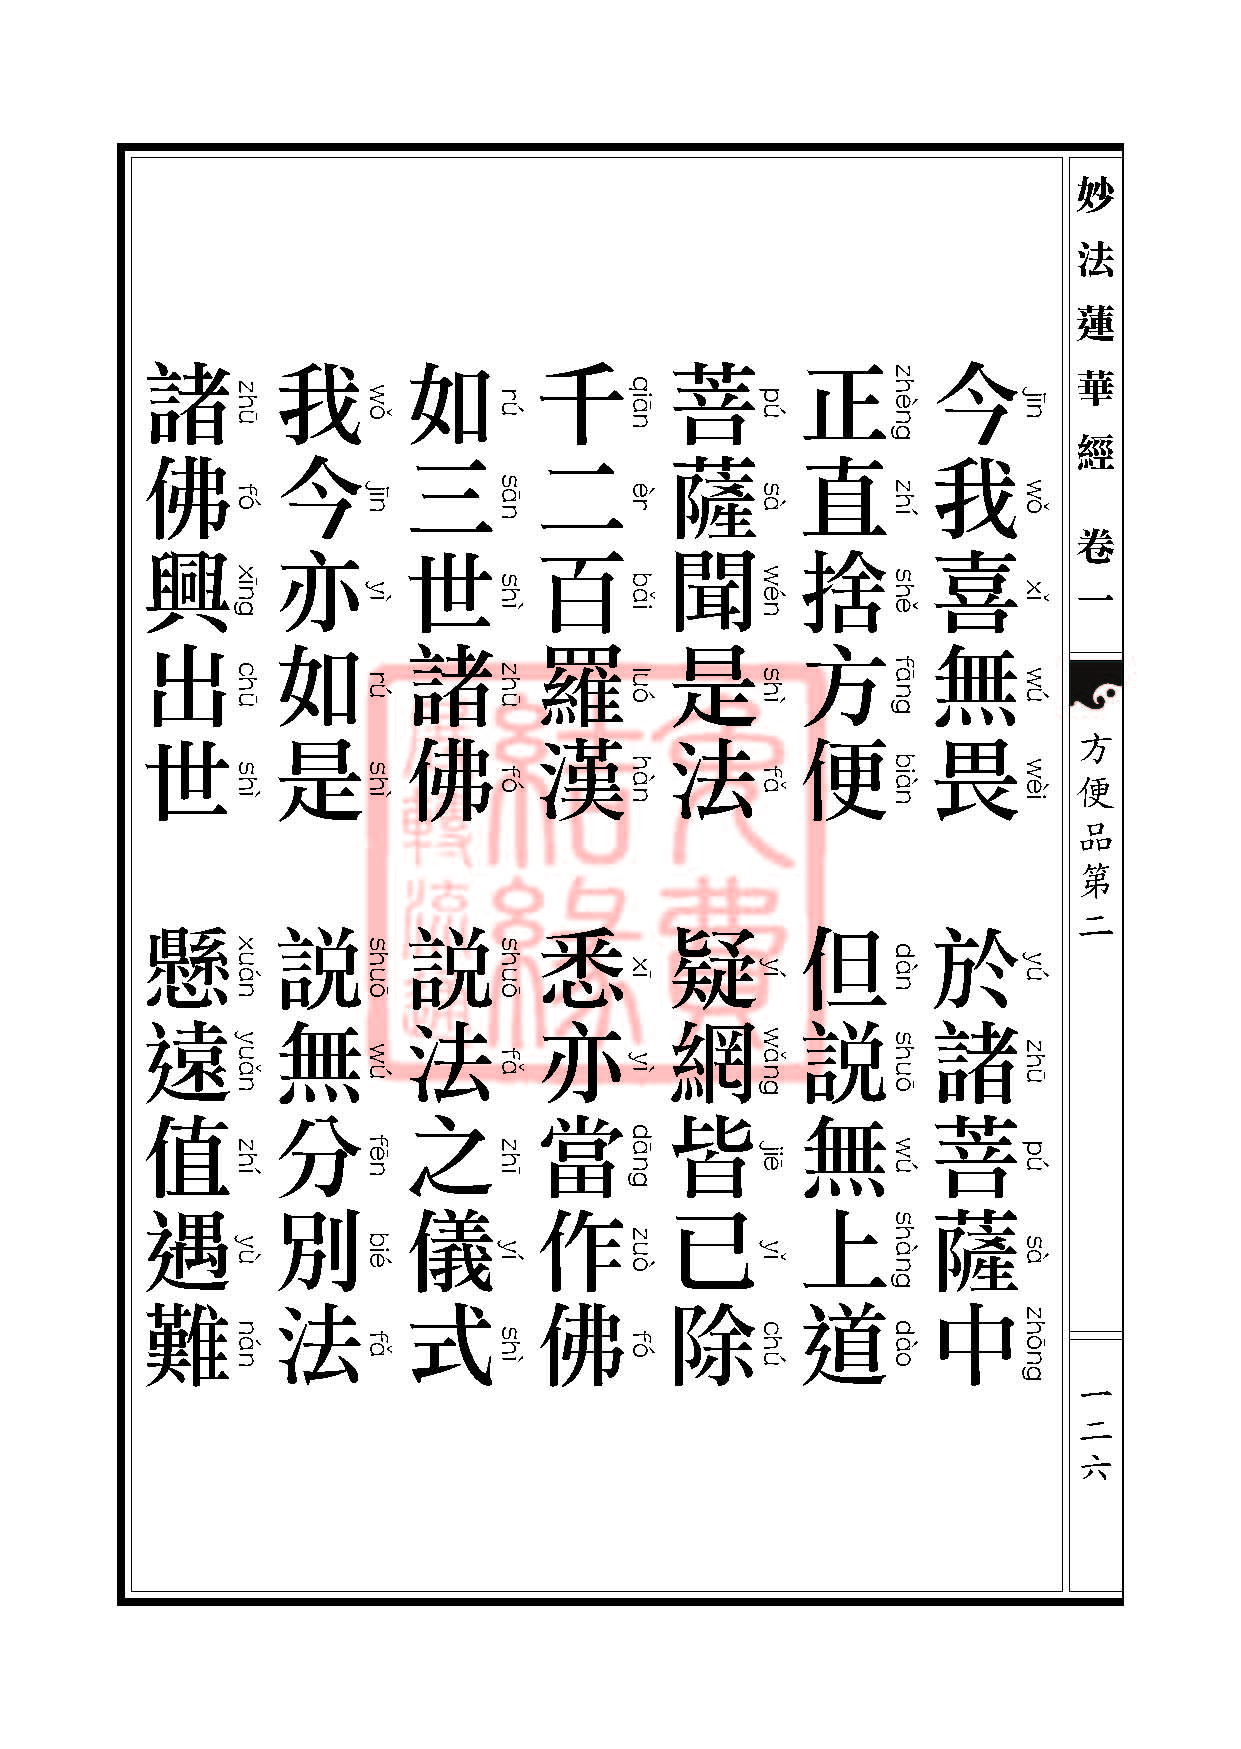 Book_FHJ_HK-A6-PY_Web_ҳ_126.jpg